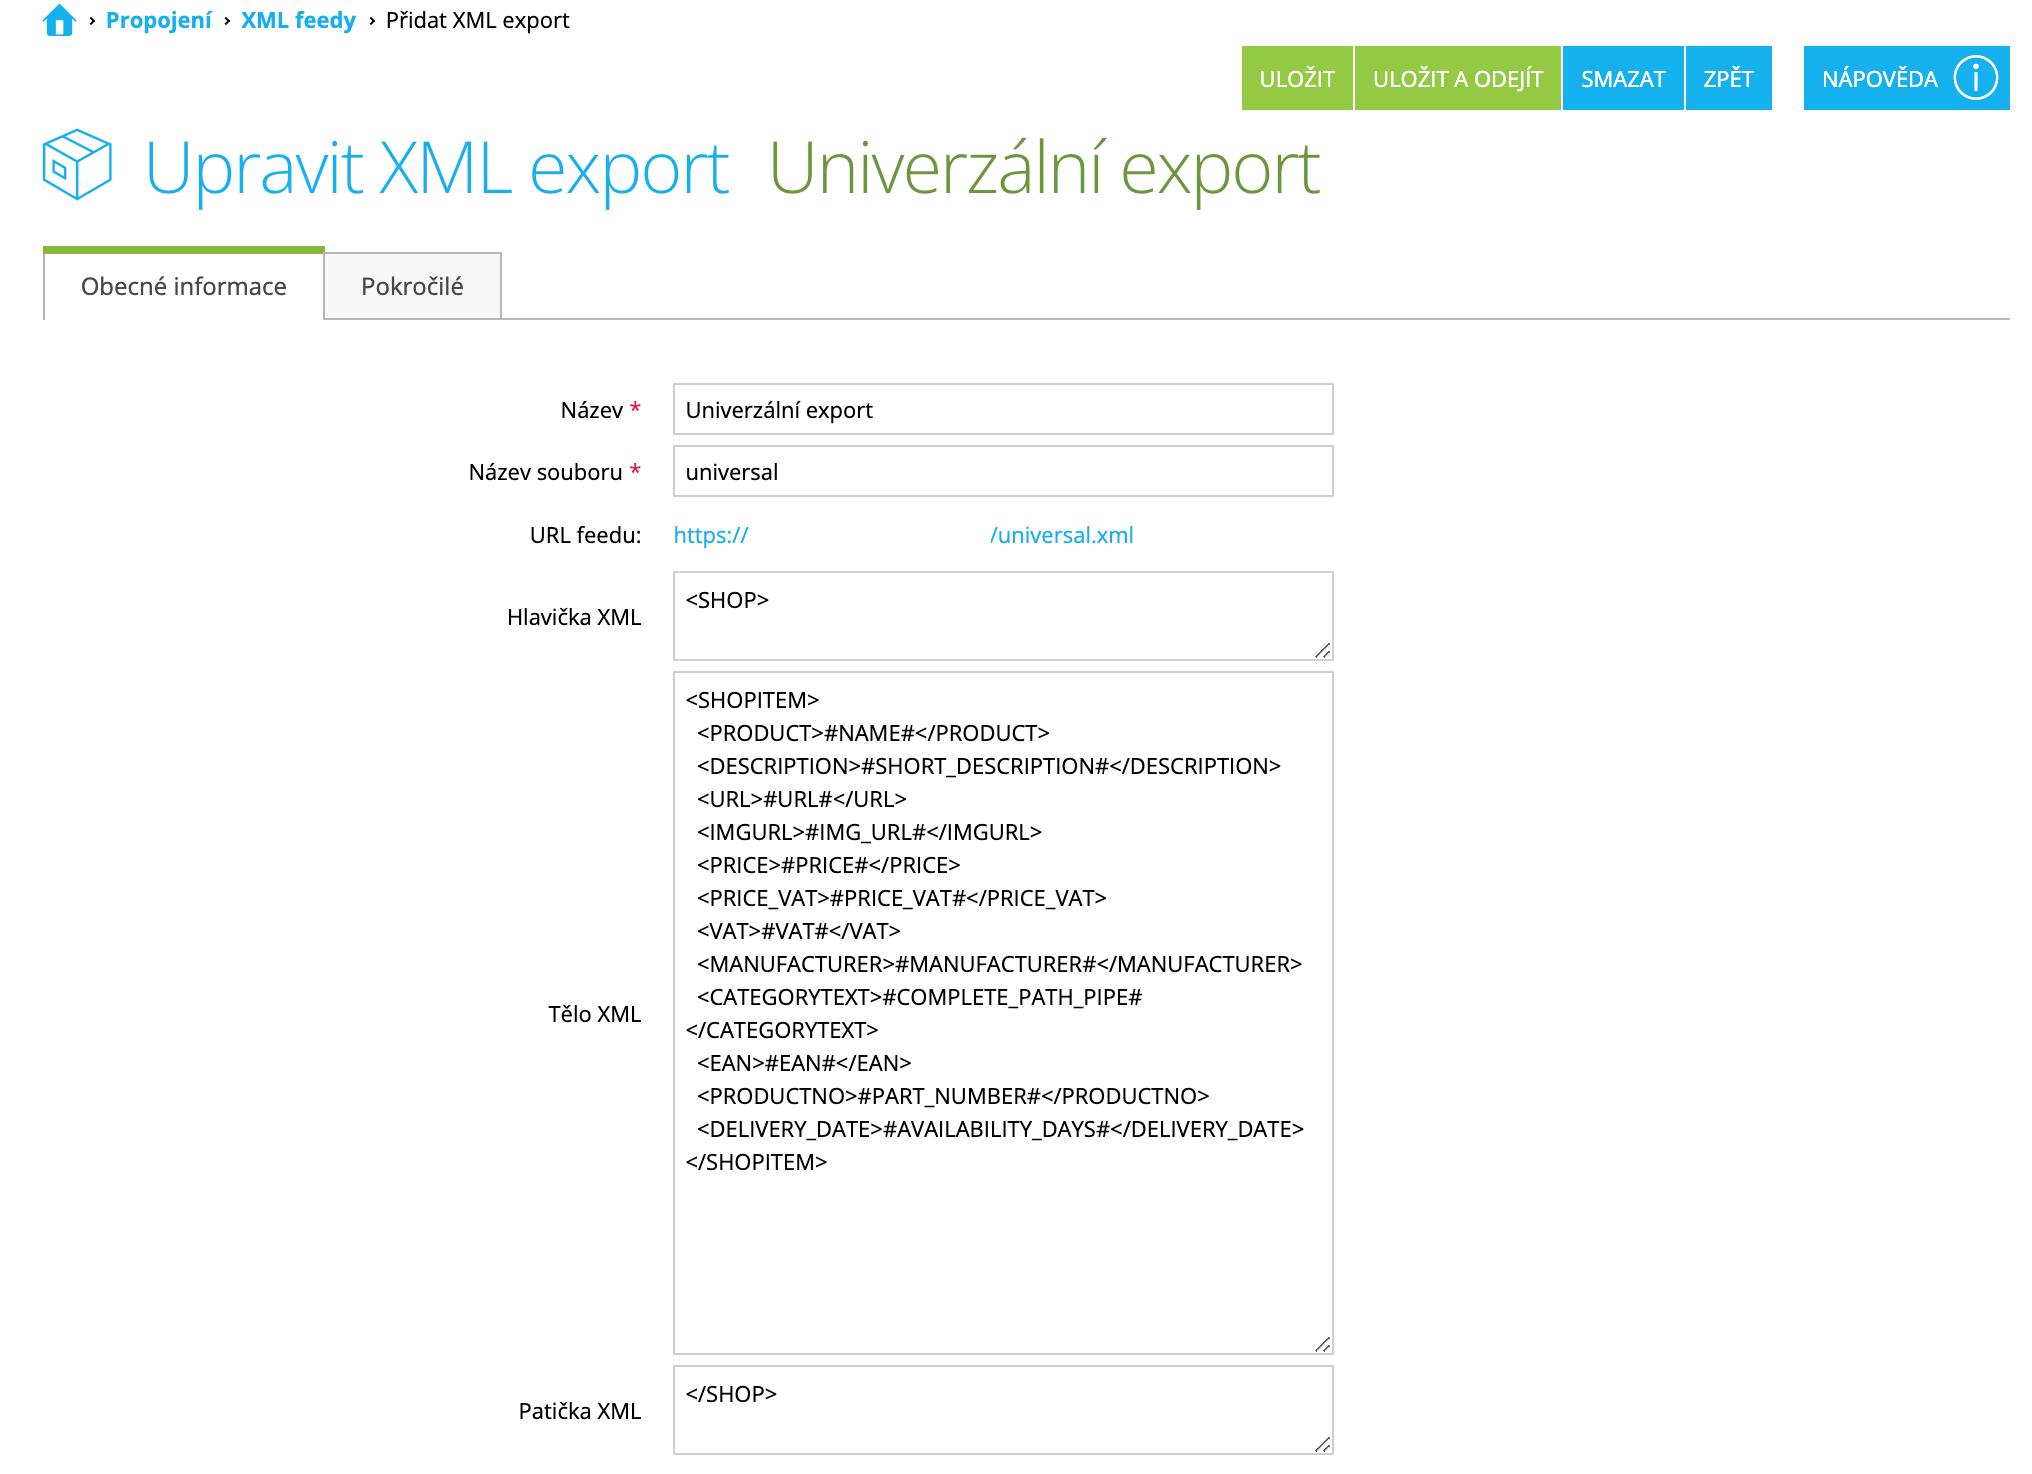 02-upravit-xml-export.png